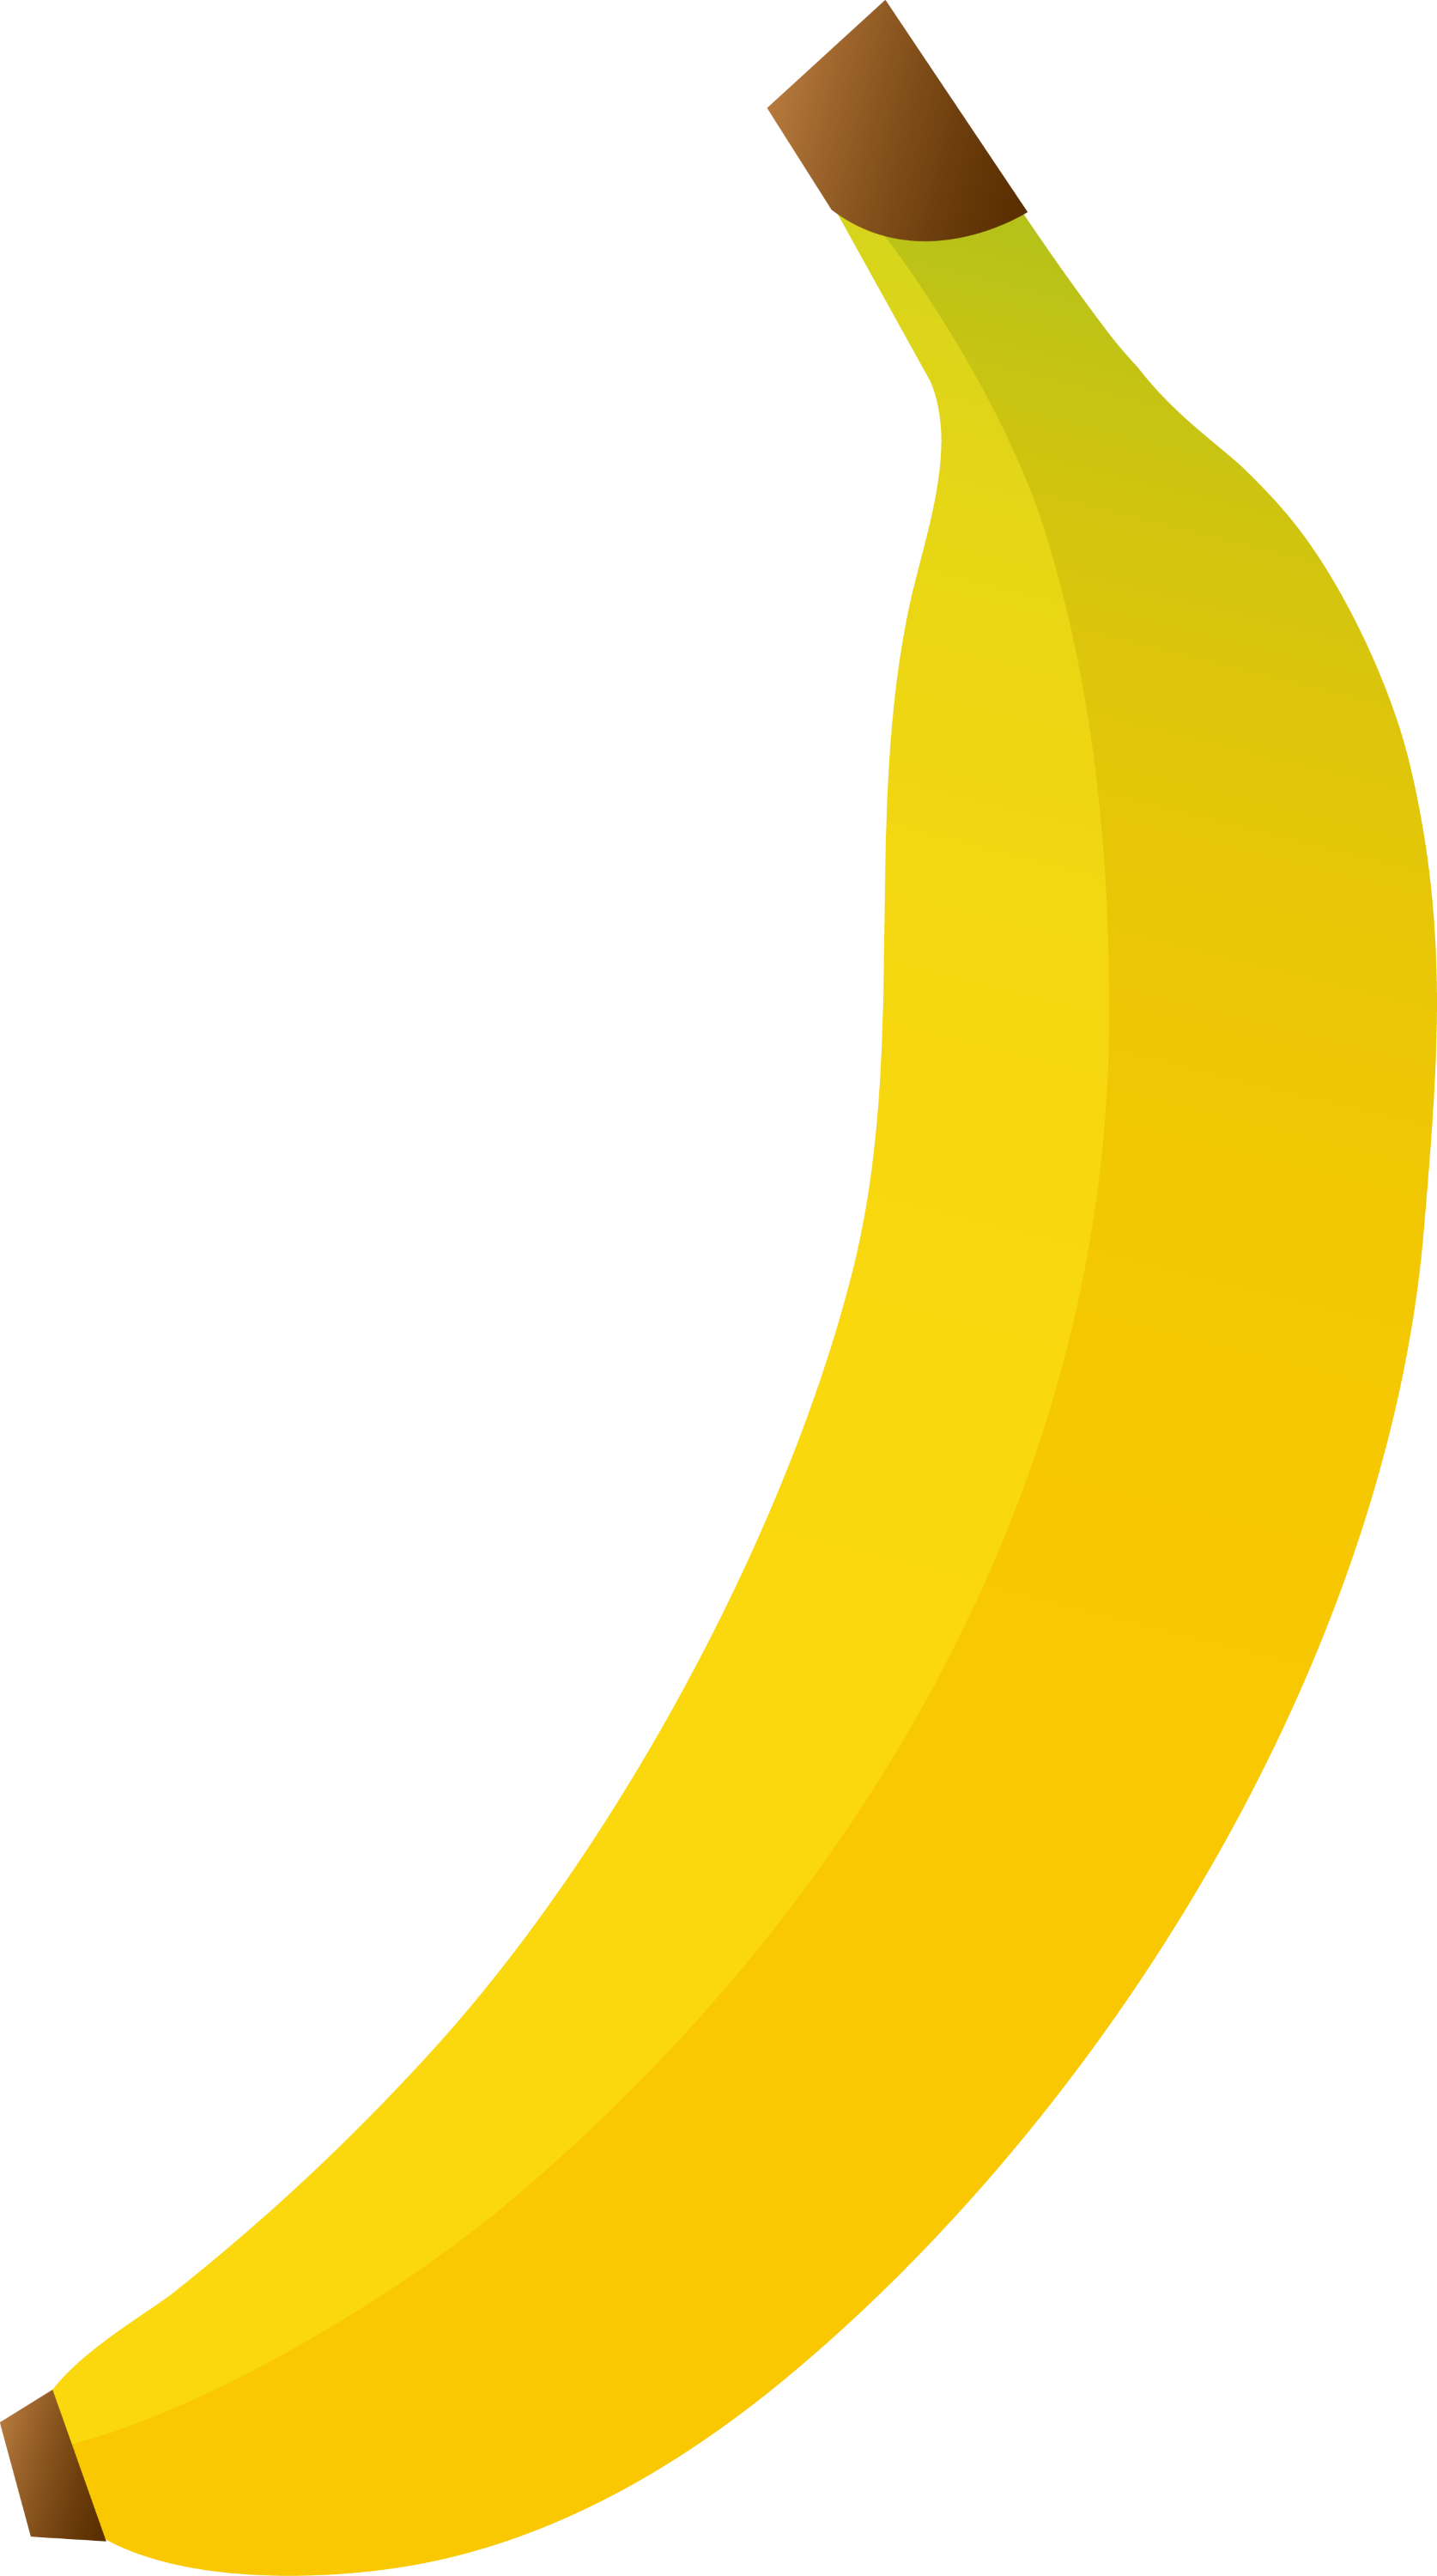 yellow banana clipart - photo #16